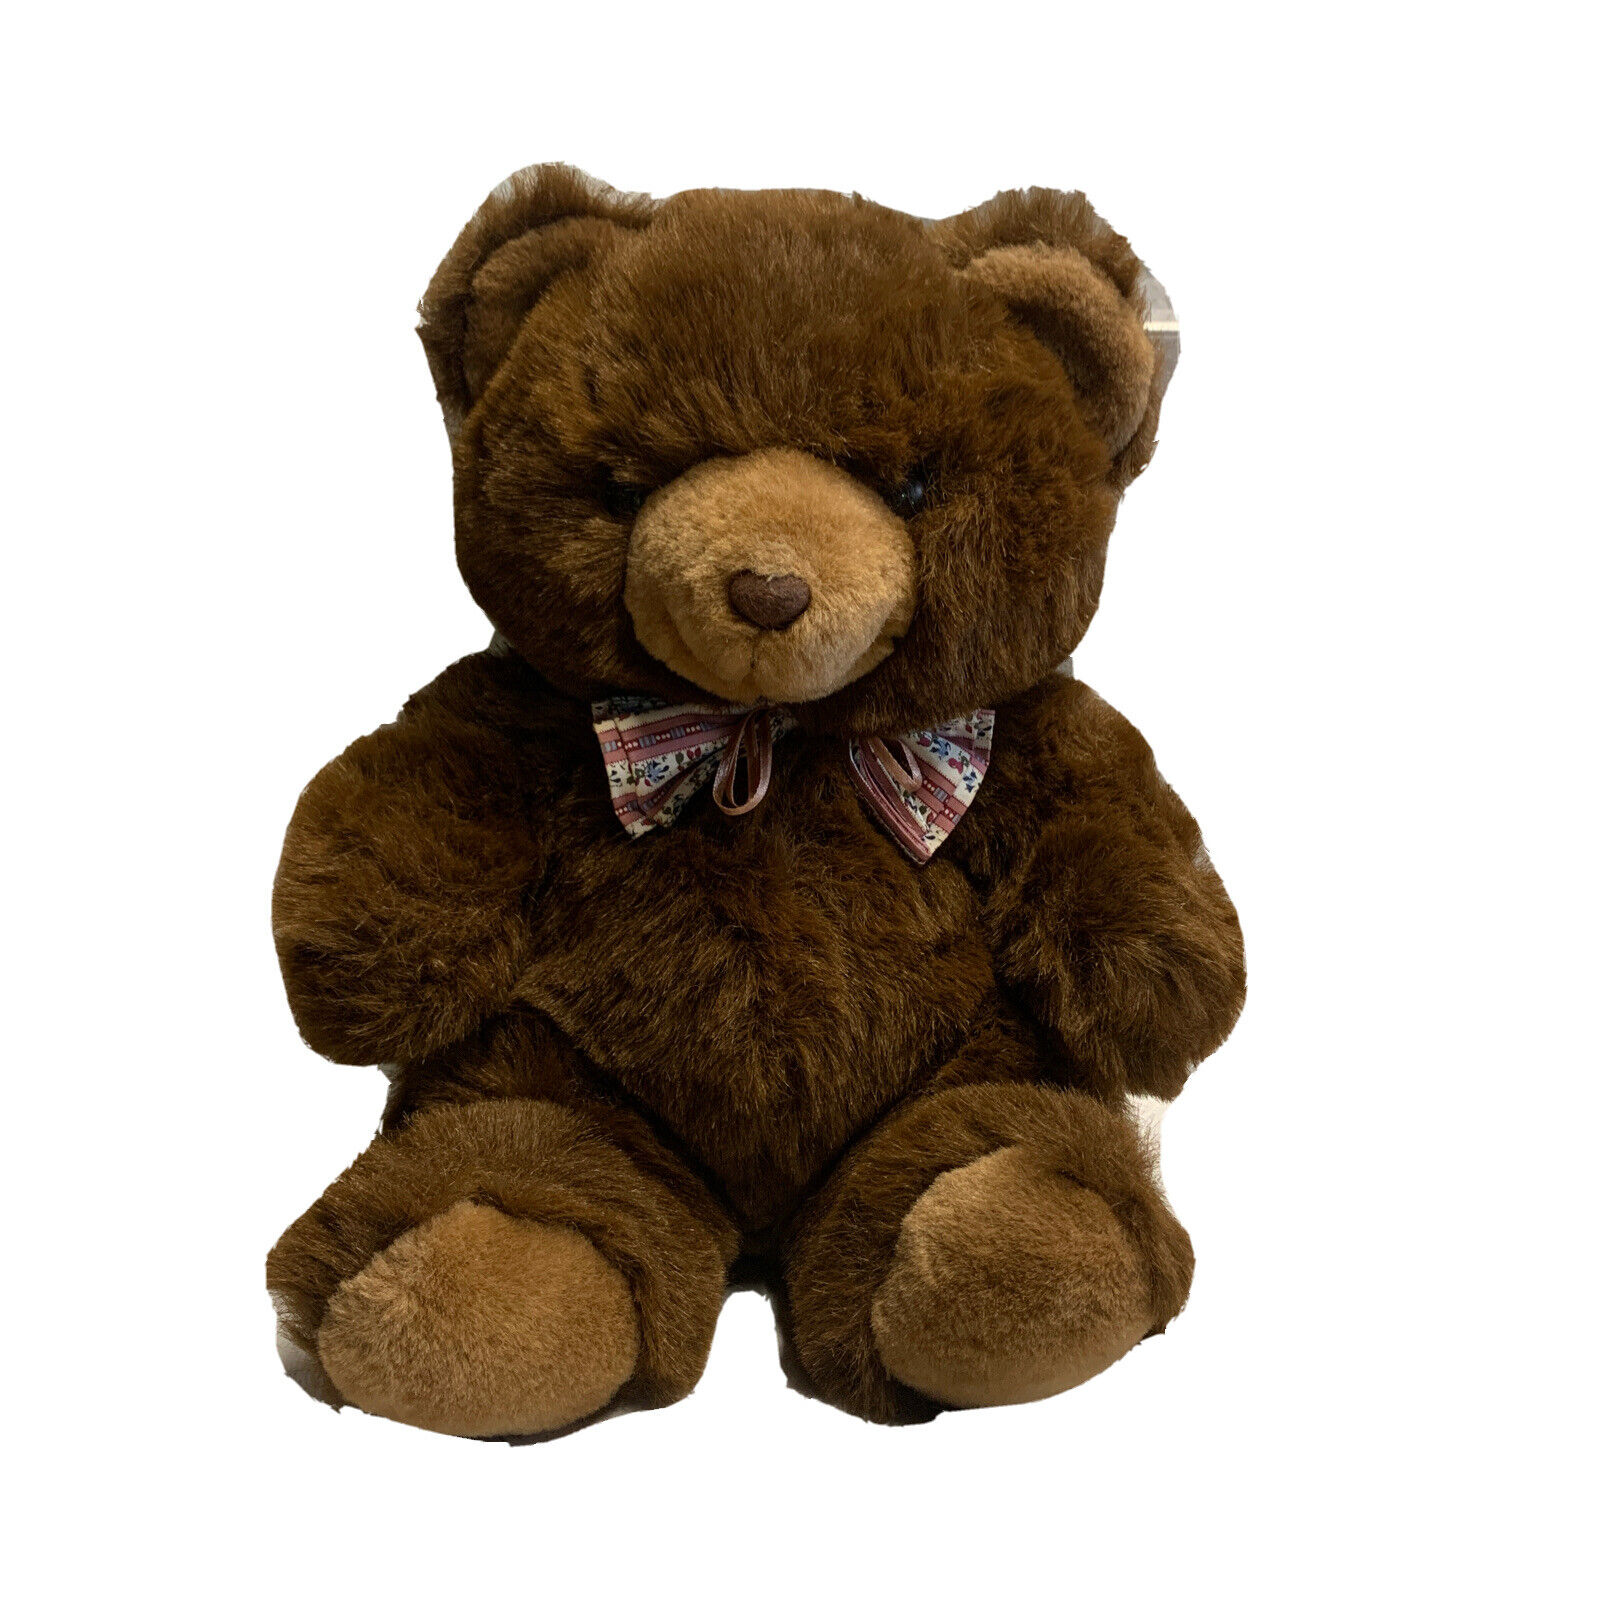 Vintage Teddy Bear Brown Fluffy 35cm High